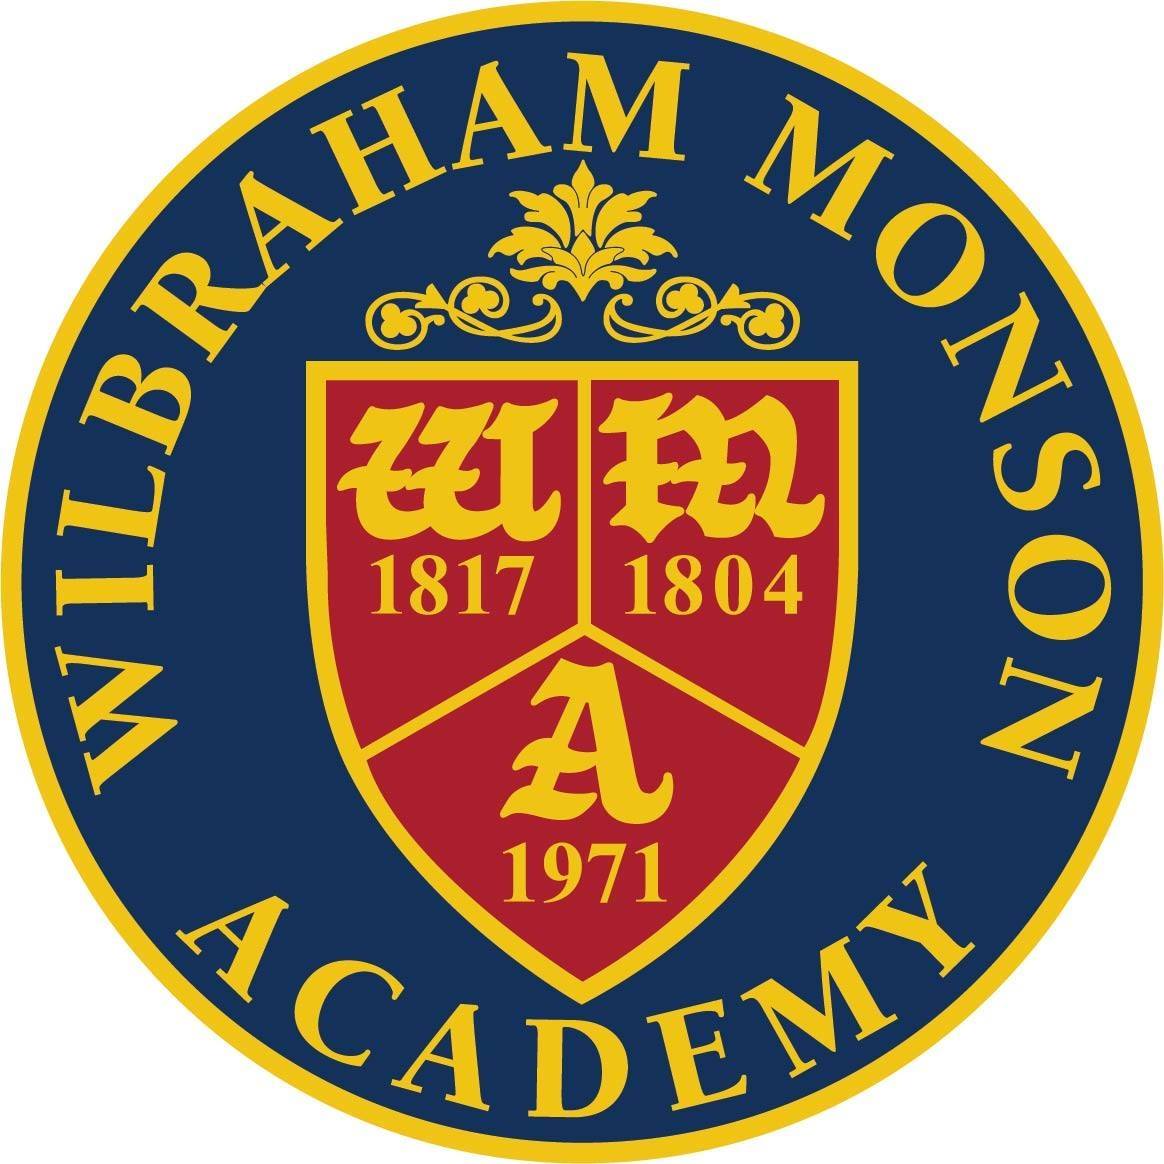 Wilbraham and Monson Academy UNIMATES Education